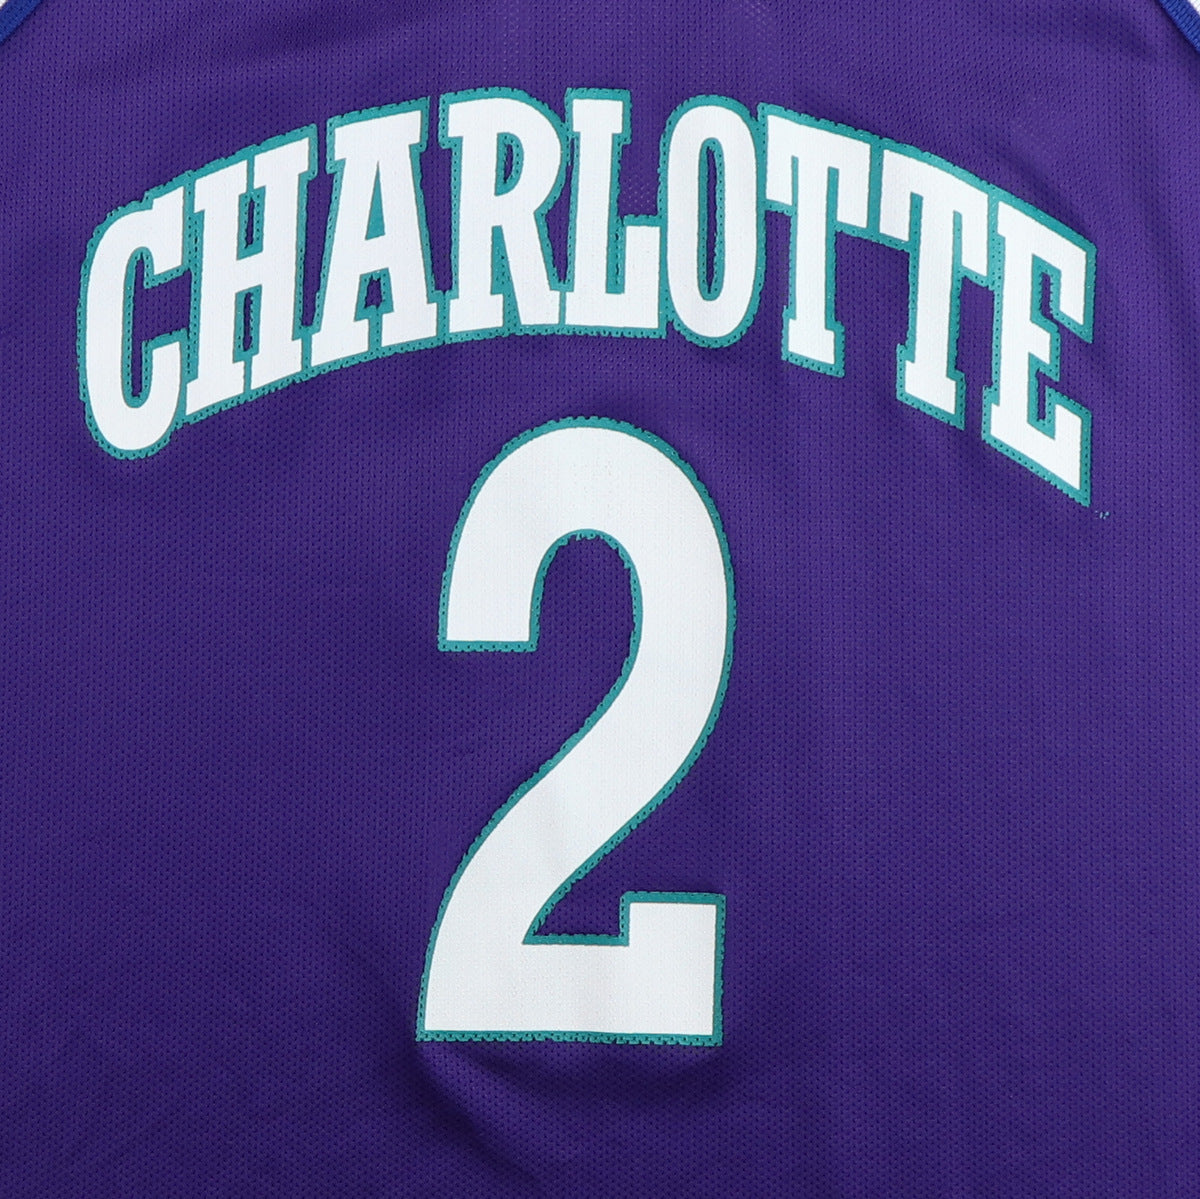 Wyco Vintage 1990s Larry Johnson Charlotte Hornets Basketball Jersey